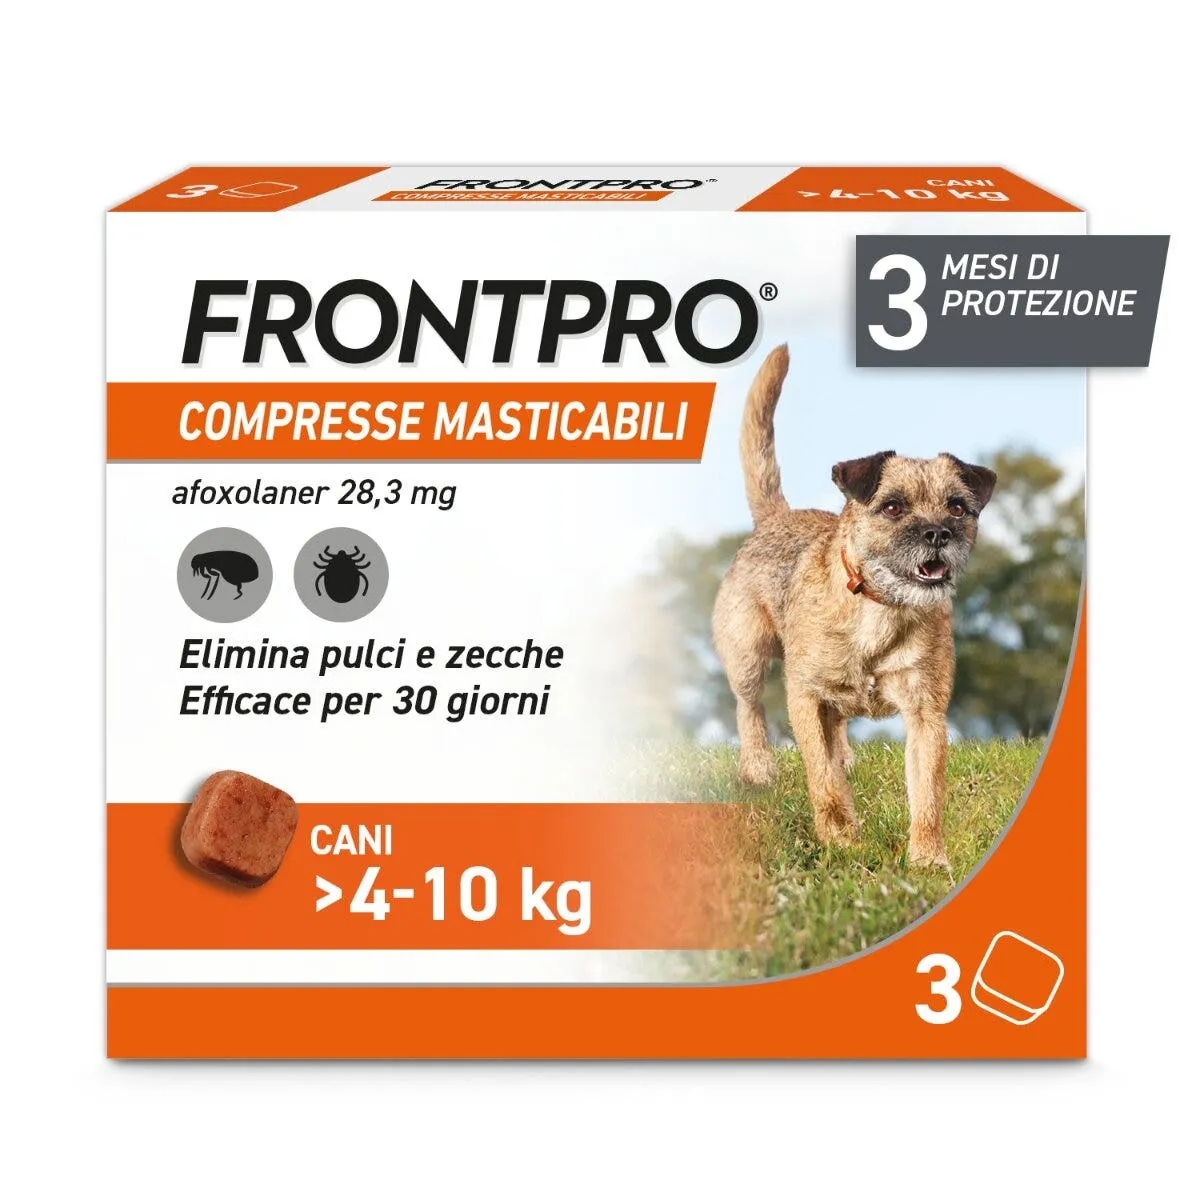 Frontpro 3 Compresse Masticabili 28,3Mg Cani 4-10Kg 